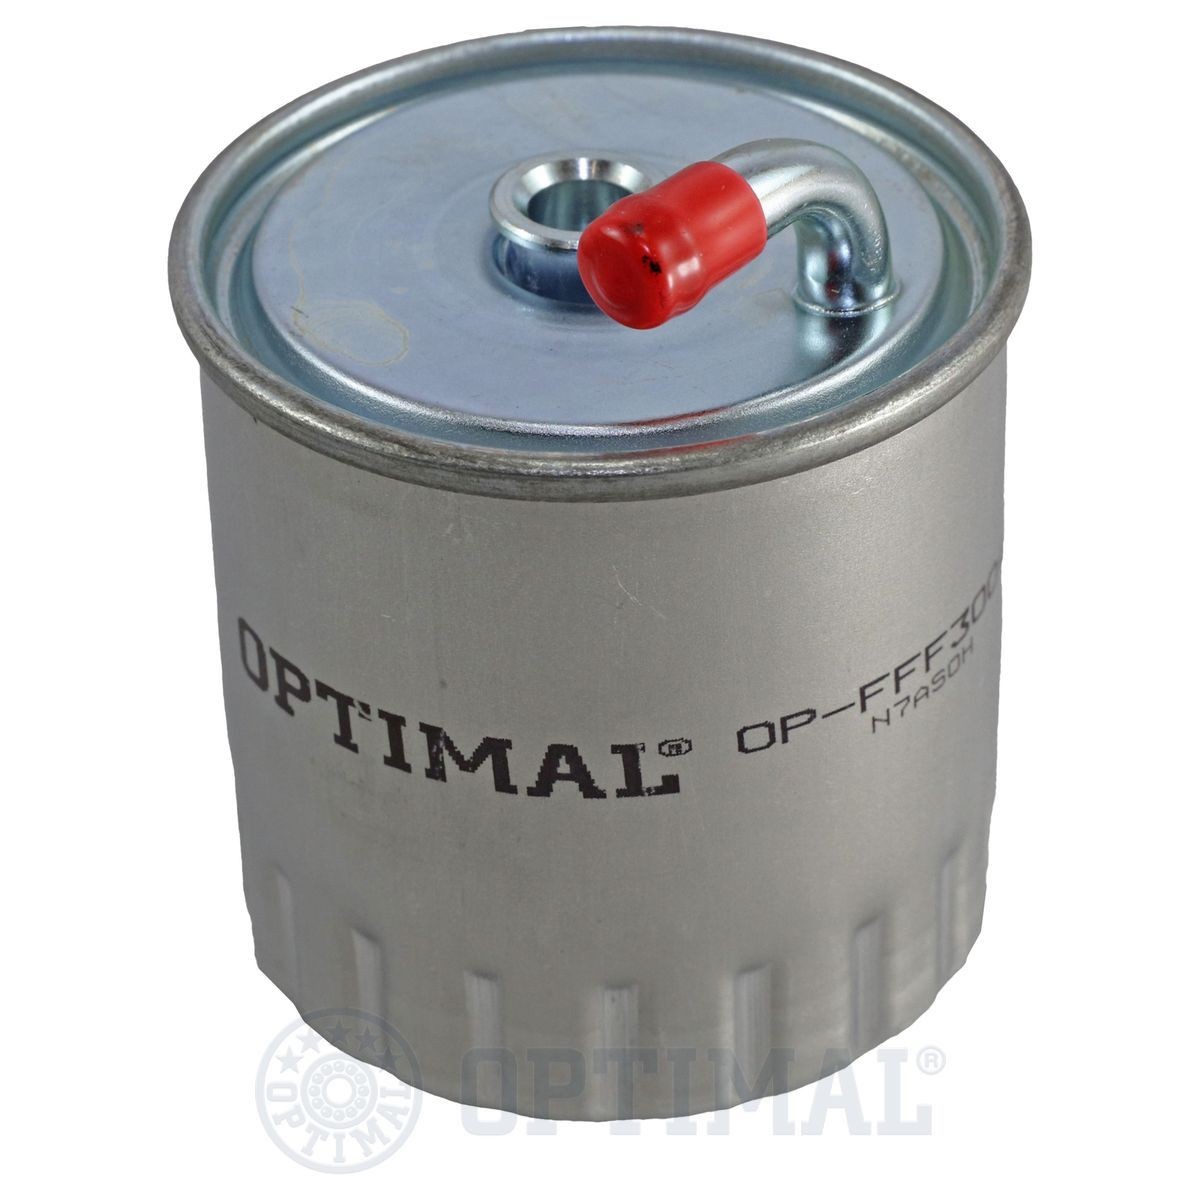 OPTIMAL OP-FFF30049 Fuel filter A611 092 00 01